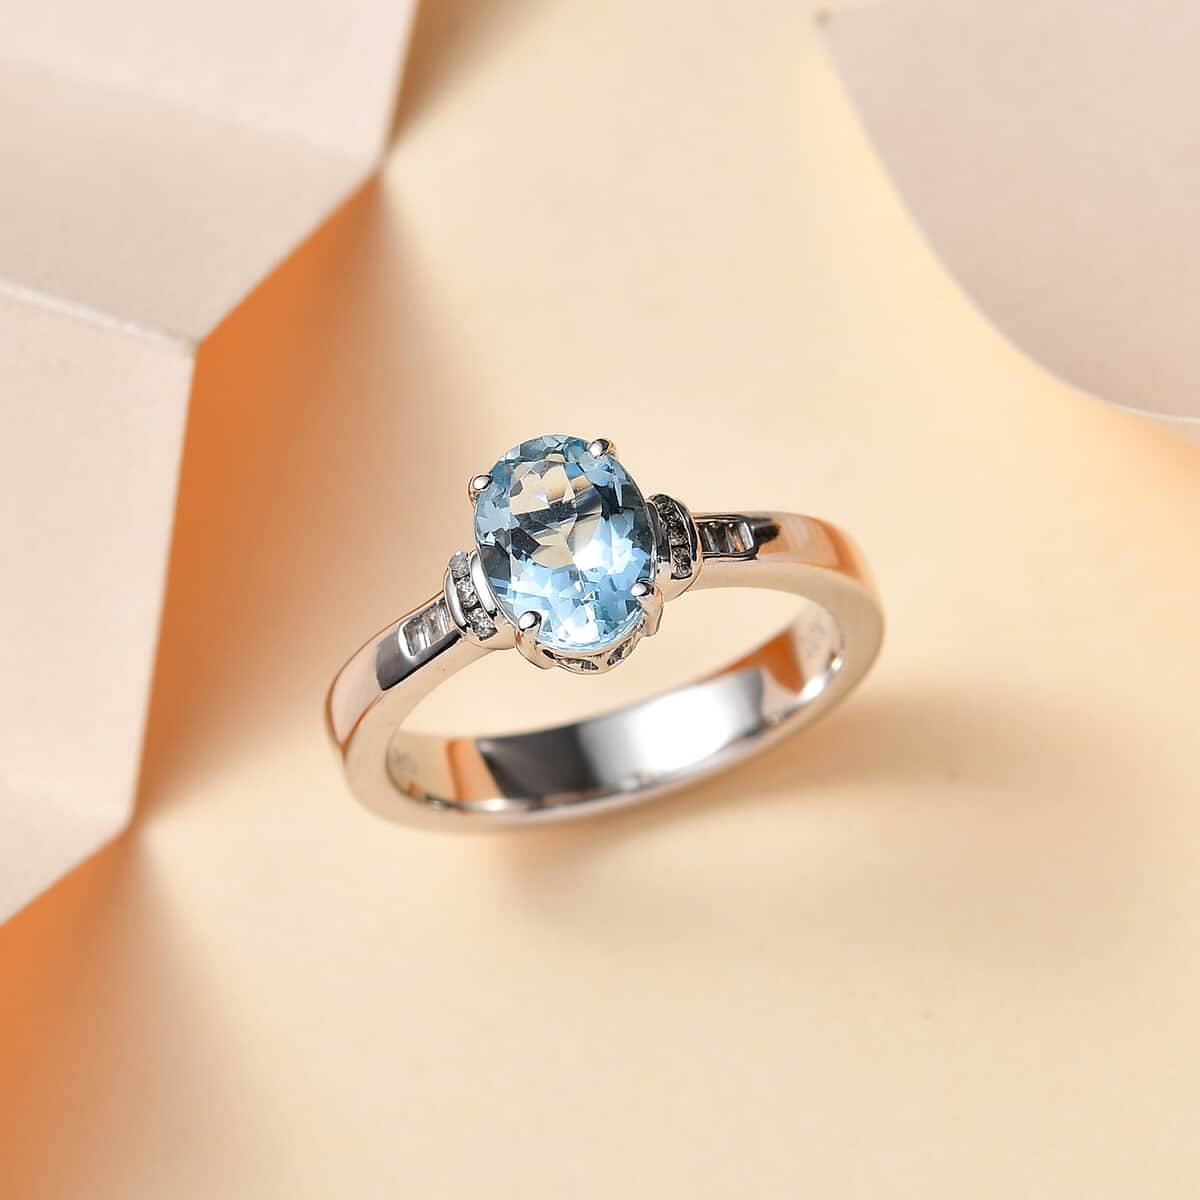 Luxoro 10K White Gold Premium Santa Maria Aquamarine and G-H I2 Diamond Statement Ring (Size 6.0) 1.20 ctw image number 1